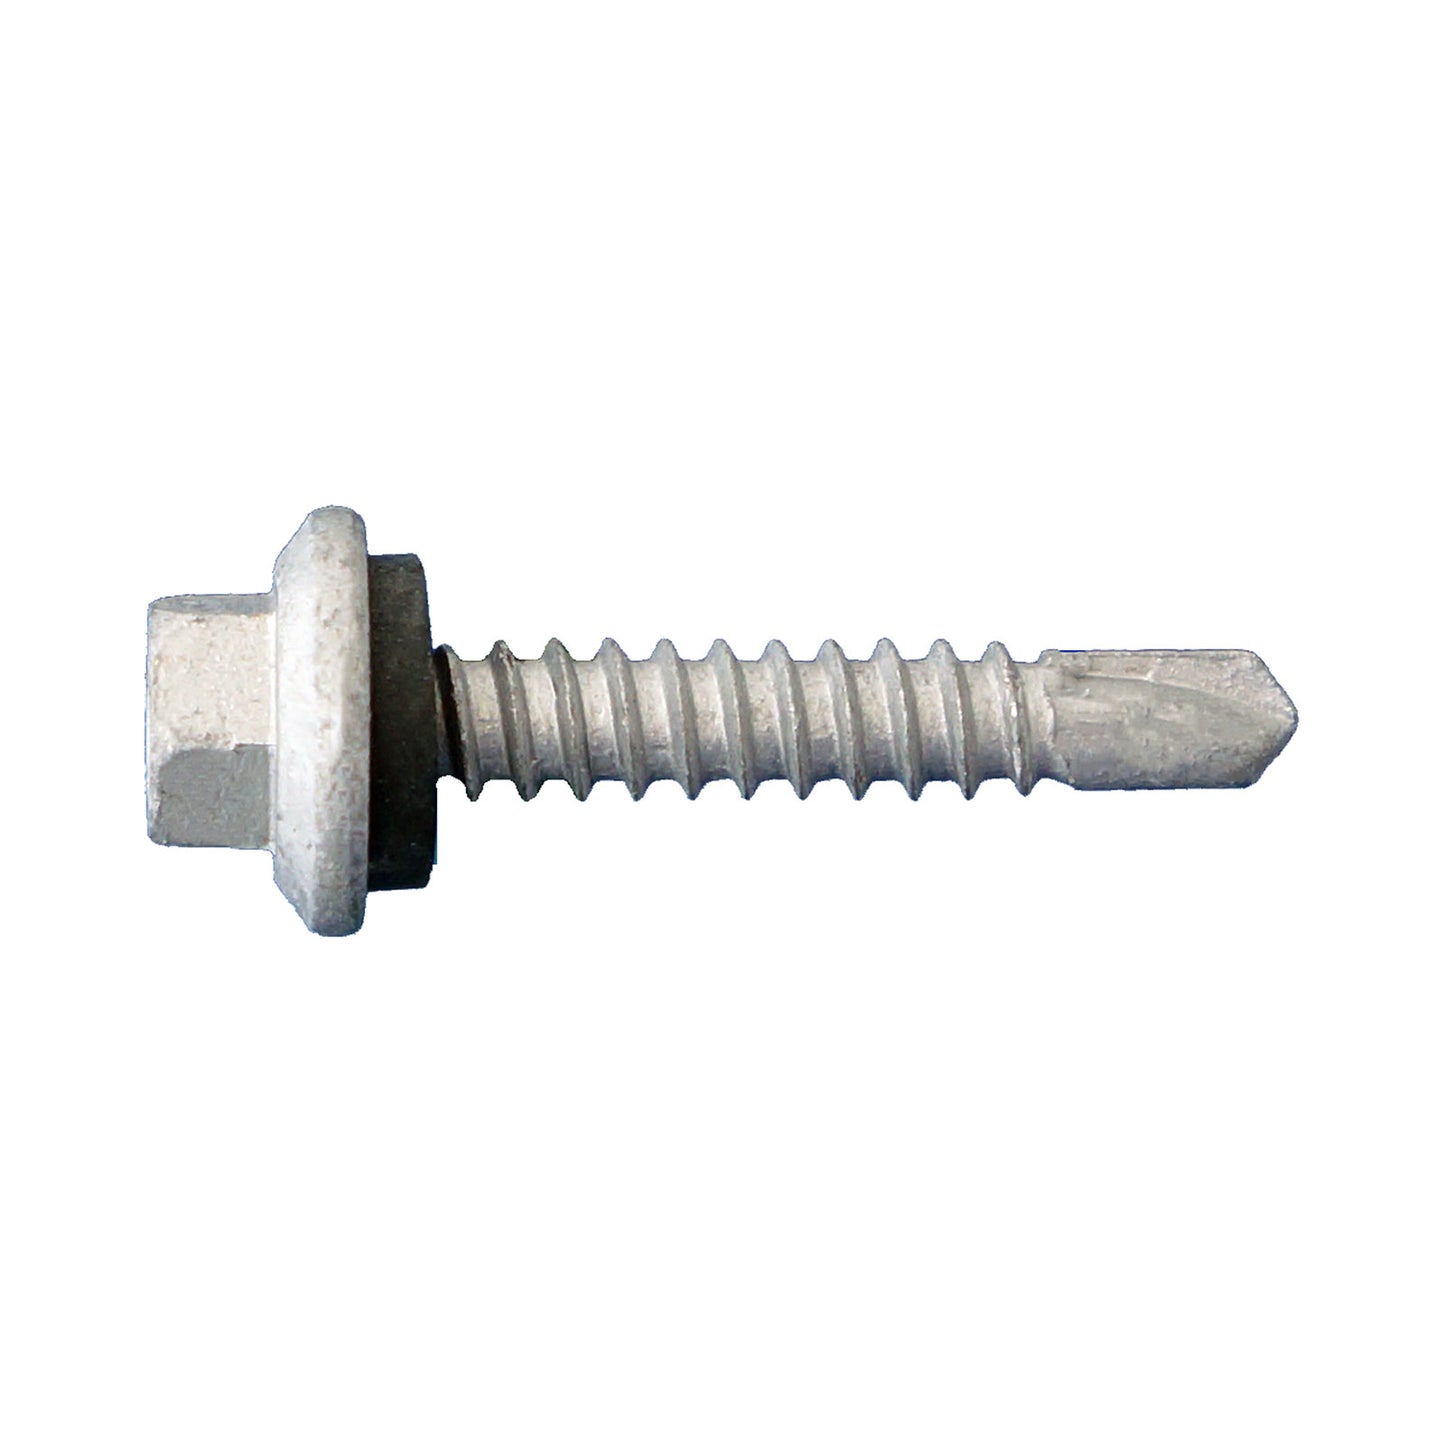 #10 x 1-1/2" Self-Drilling Metal Screw w/Washer, Hex Head - Dagger-Guard Coating, Pkg 3000